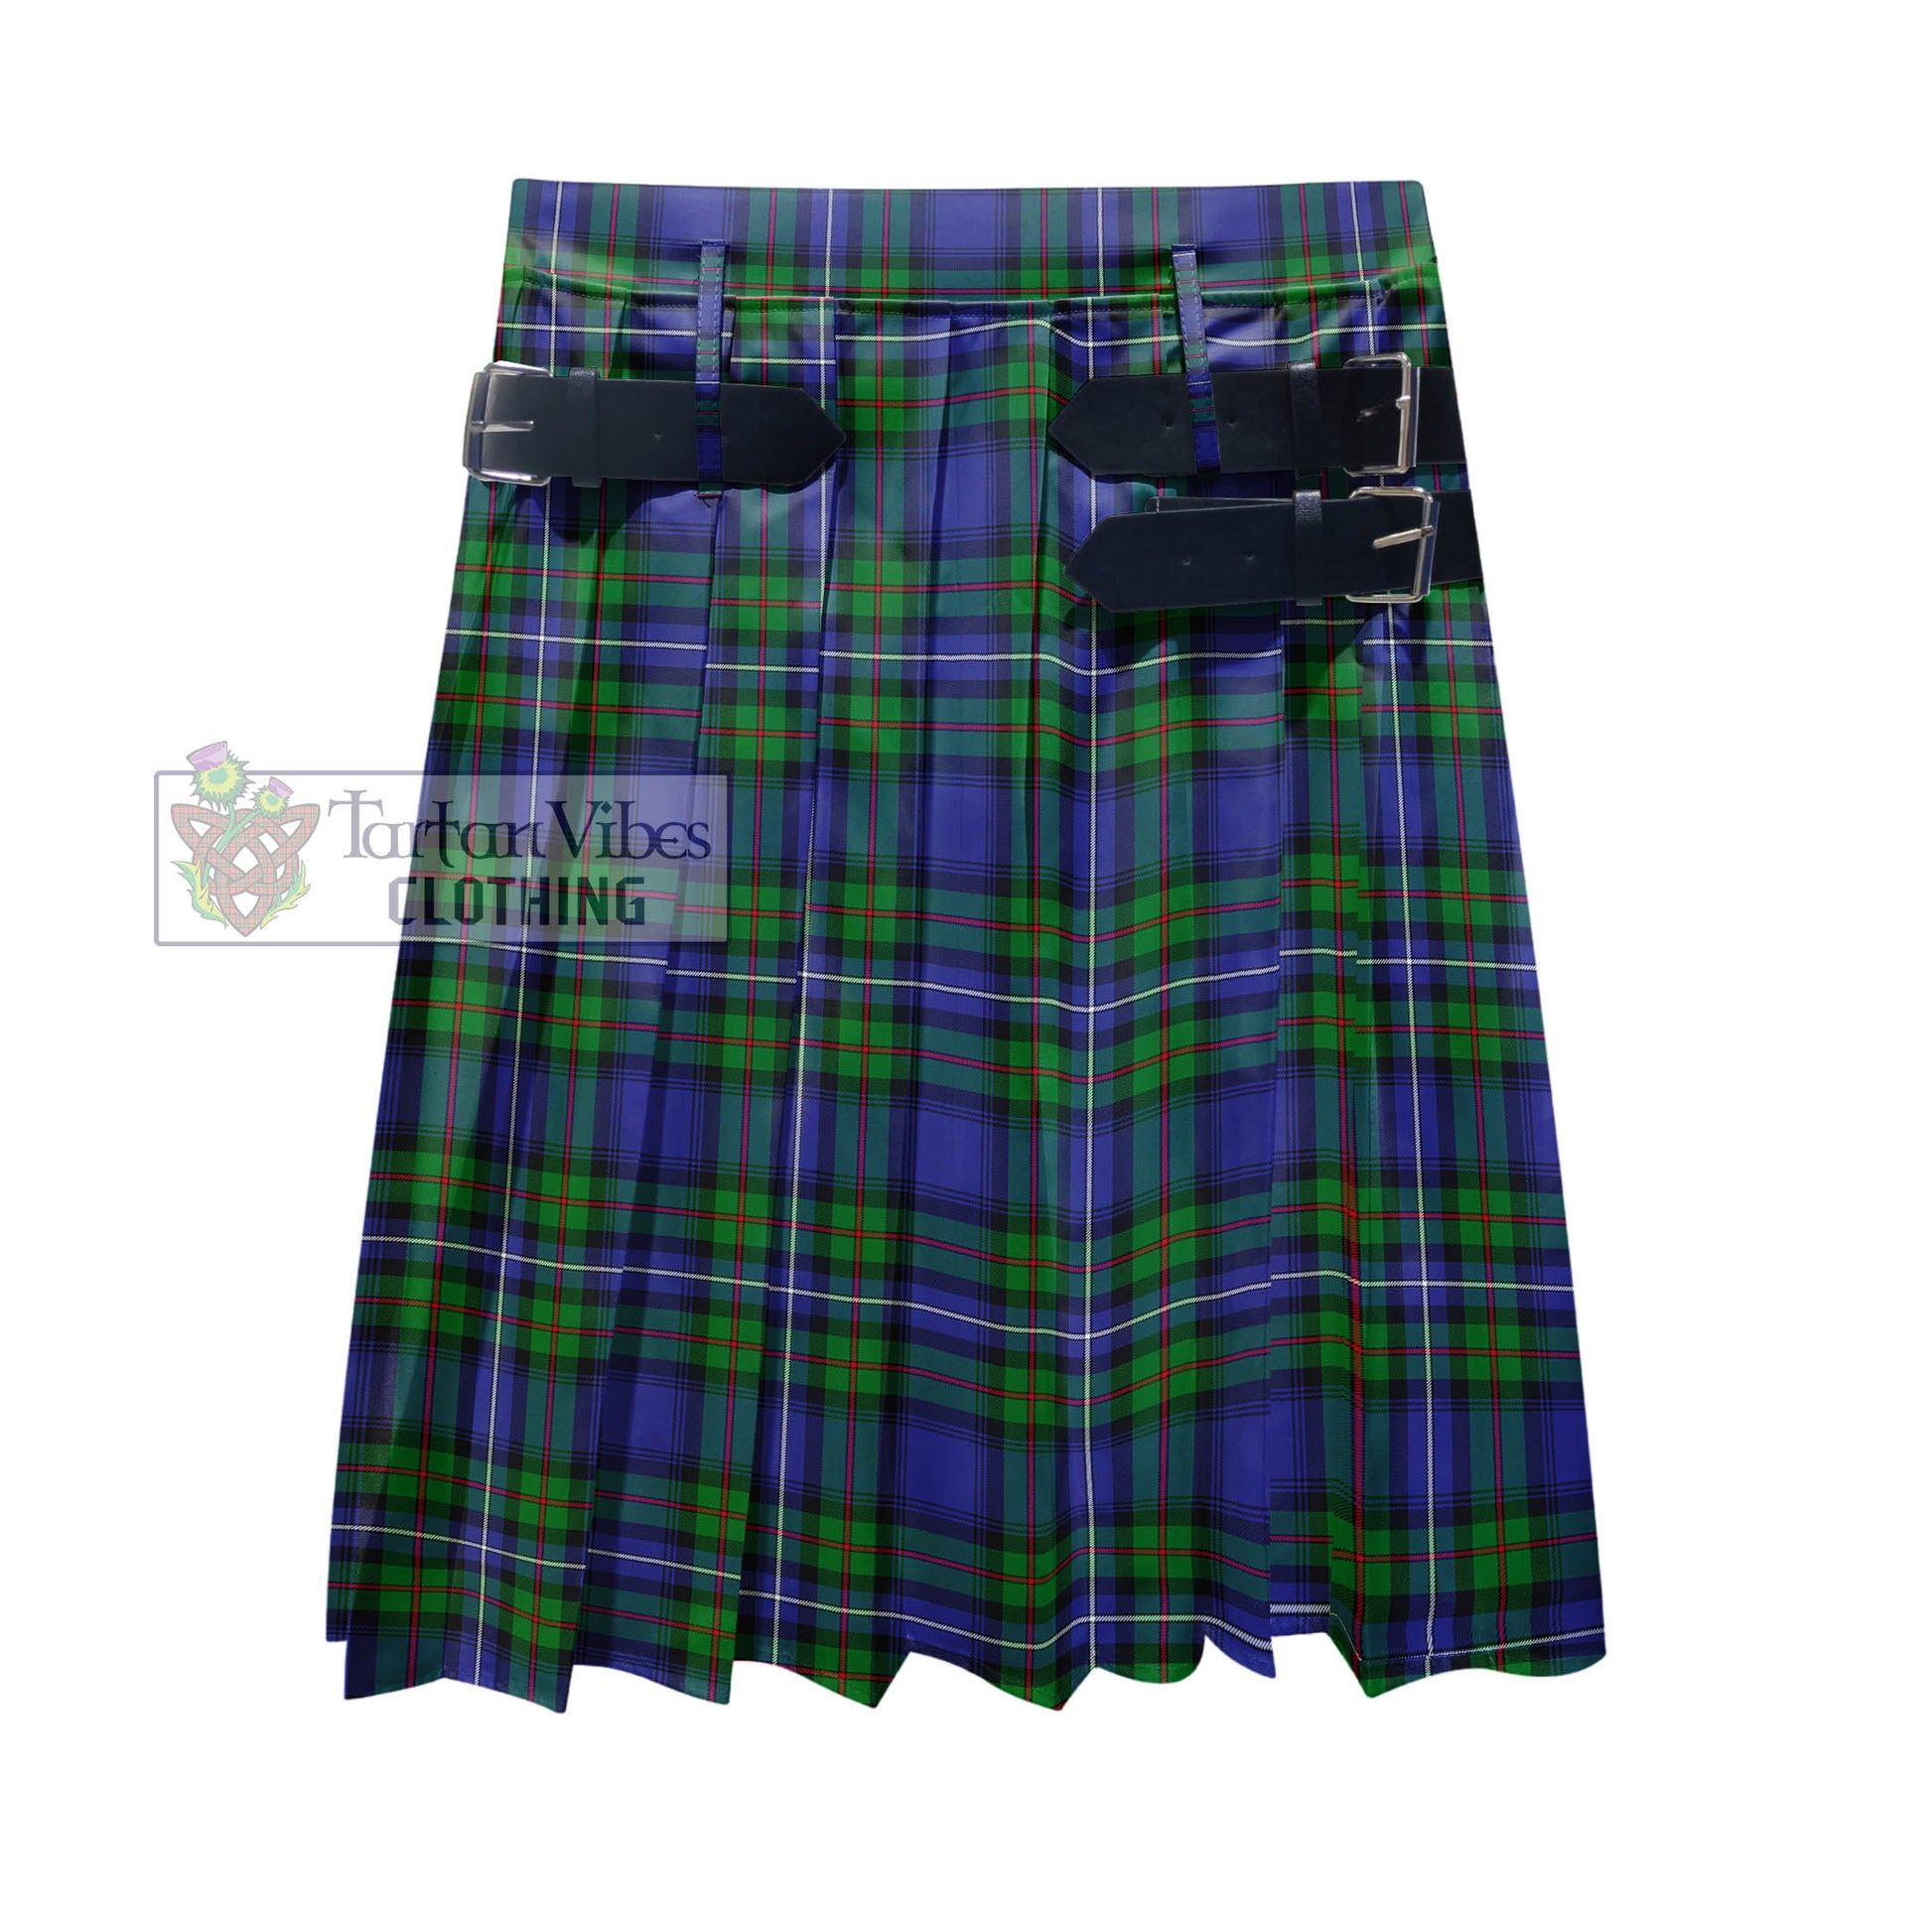 Tartan Vibes Clothing Robertson Hunting Modern Tartan Men's Pleated Skirt - Fashion Casual Retro Scottish Style